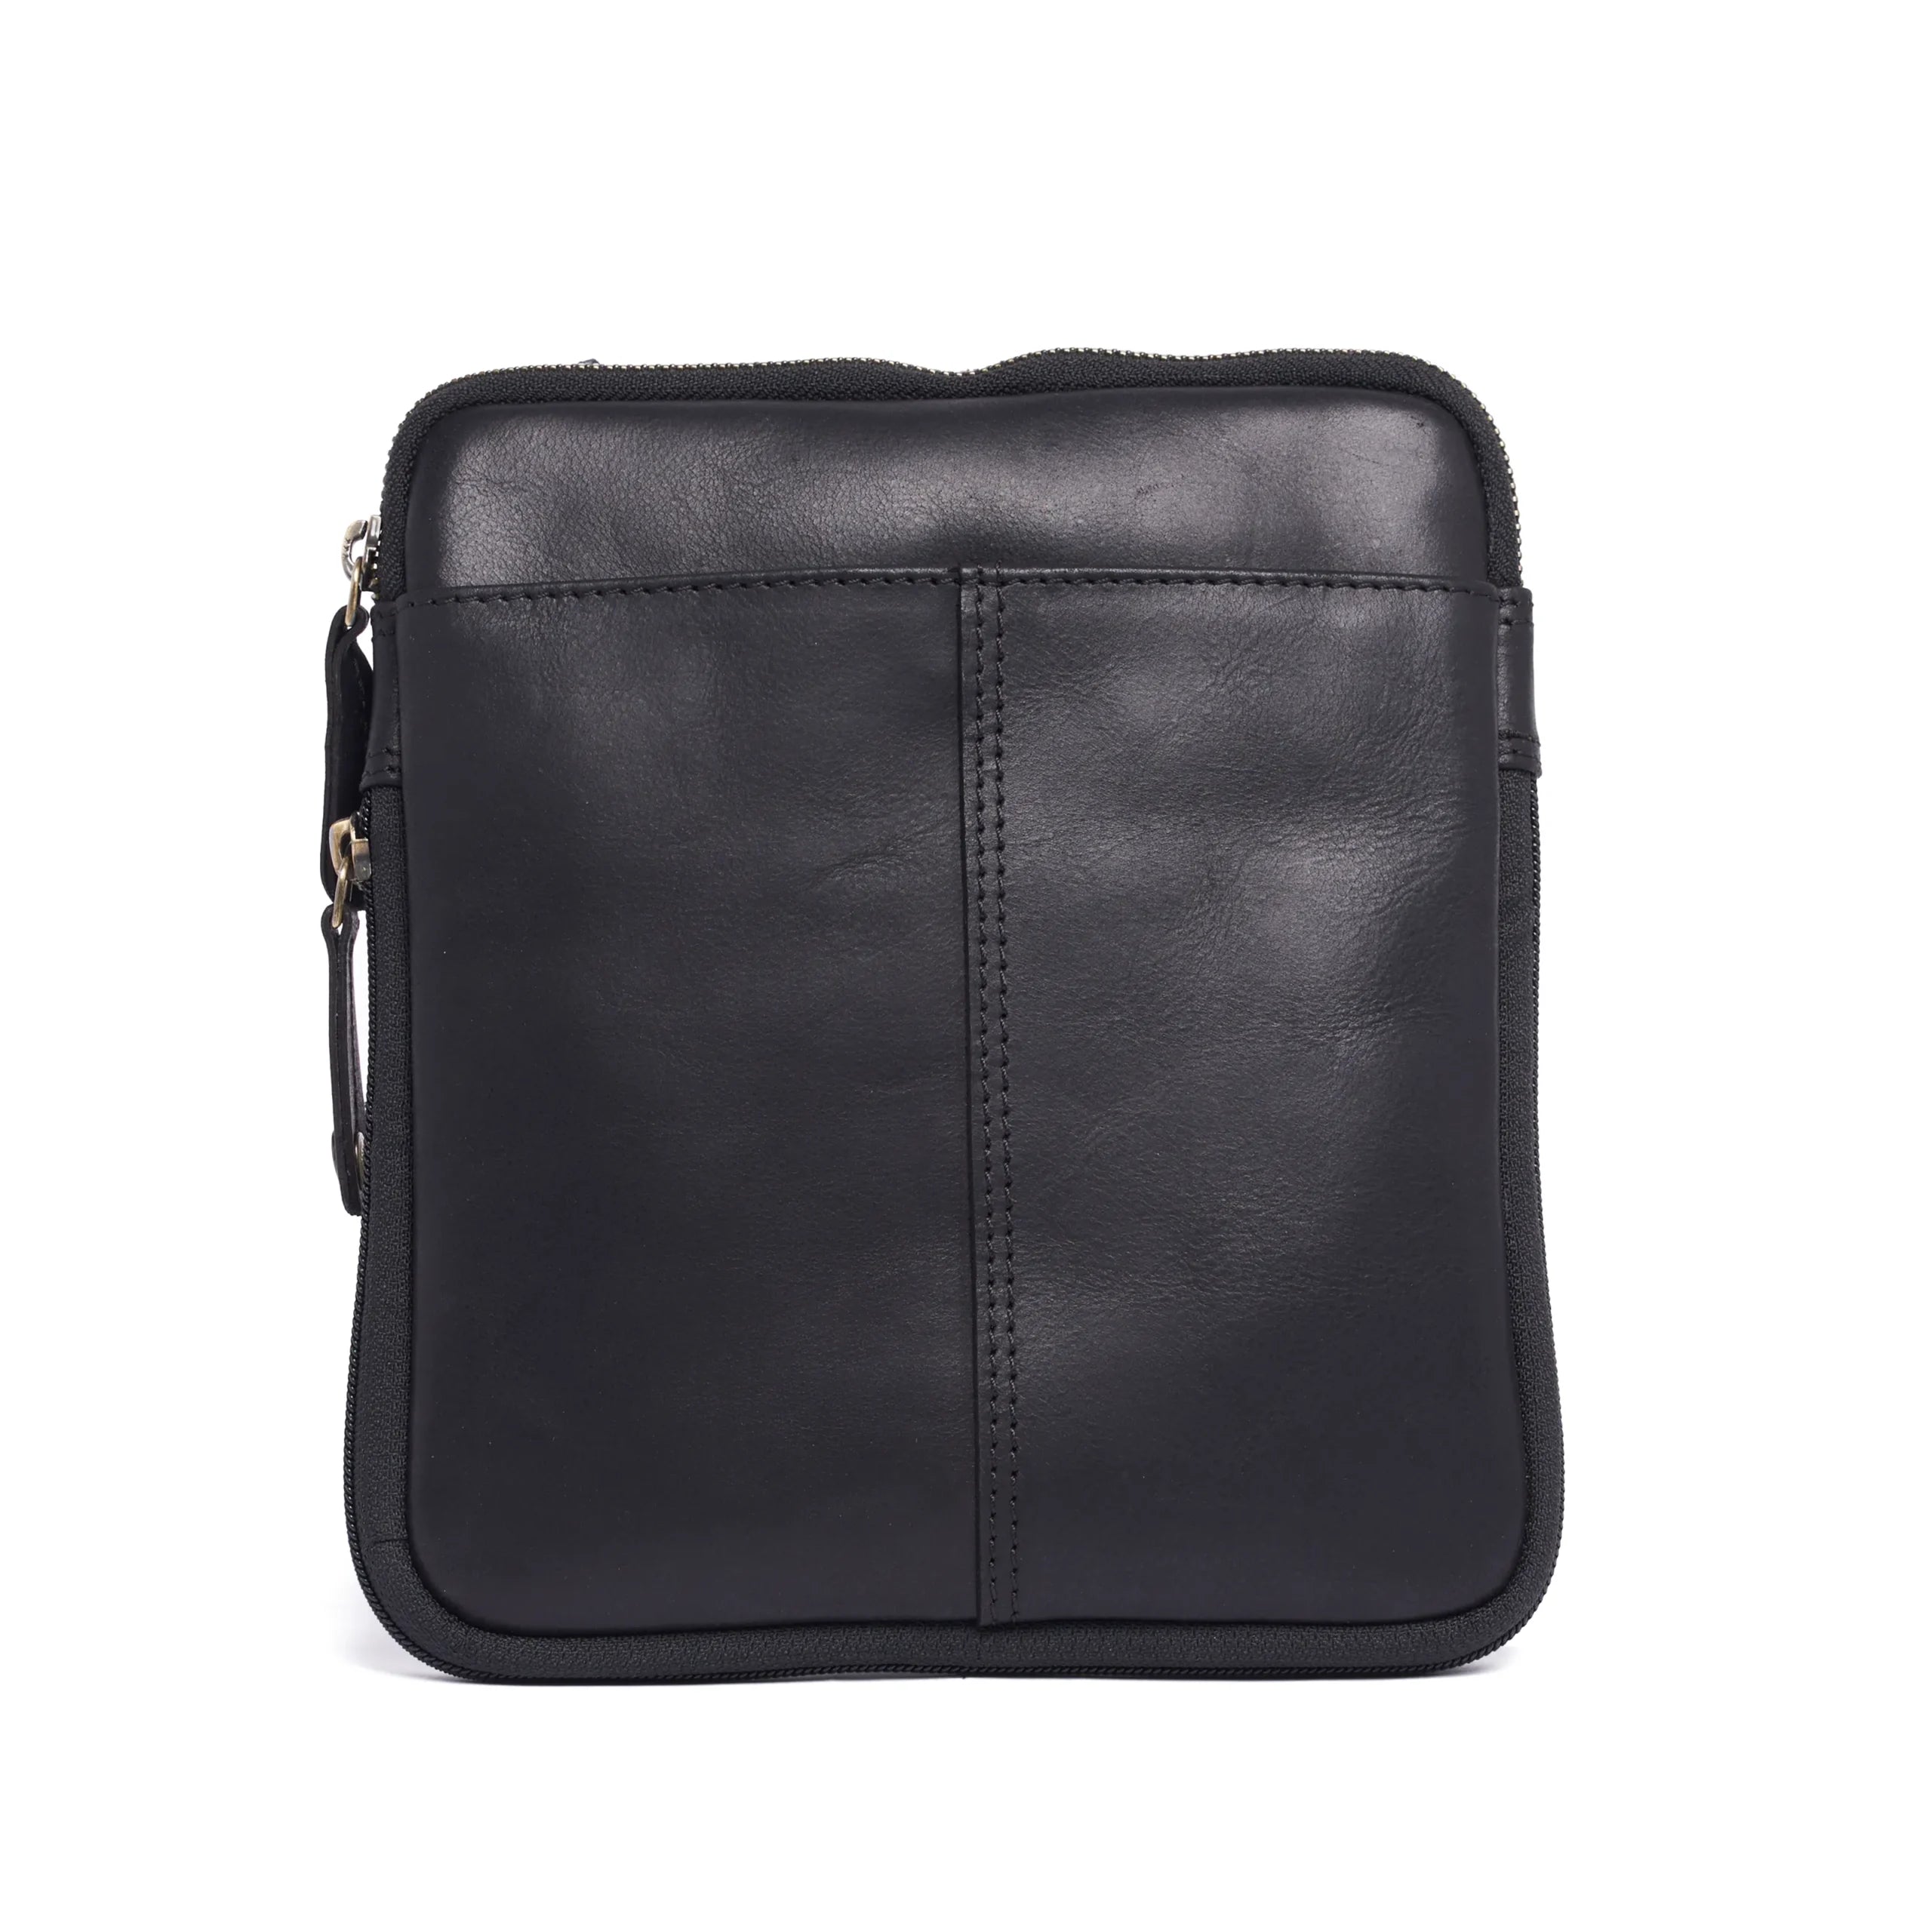 Oran - RH-2365 Cross body leather side bag - Black